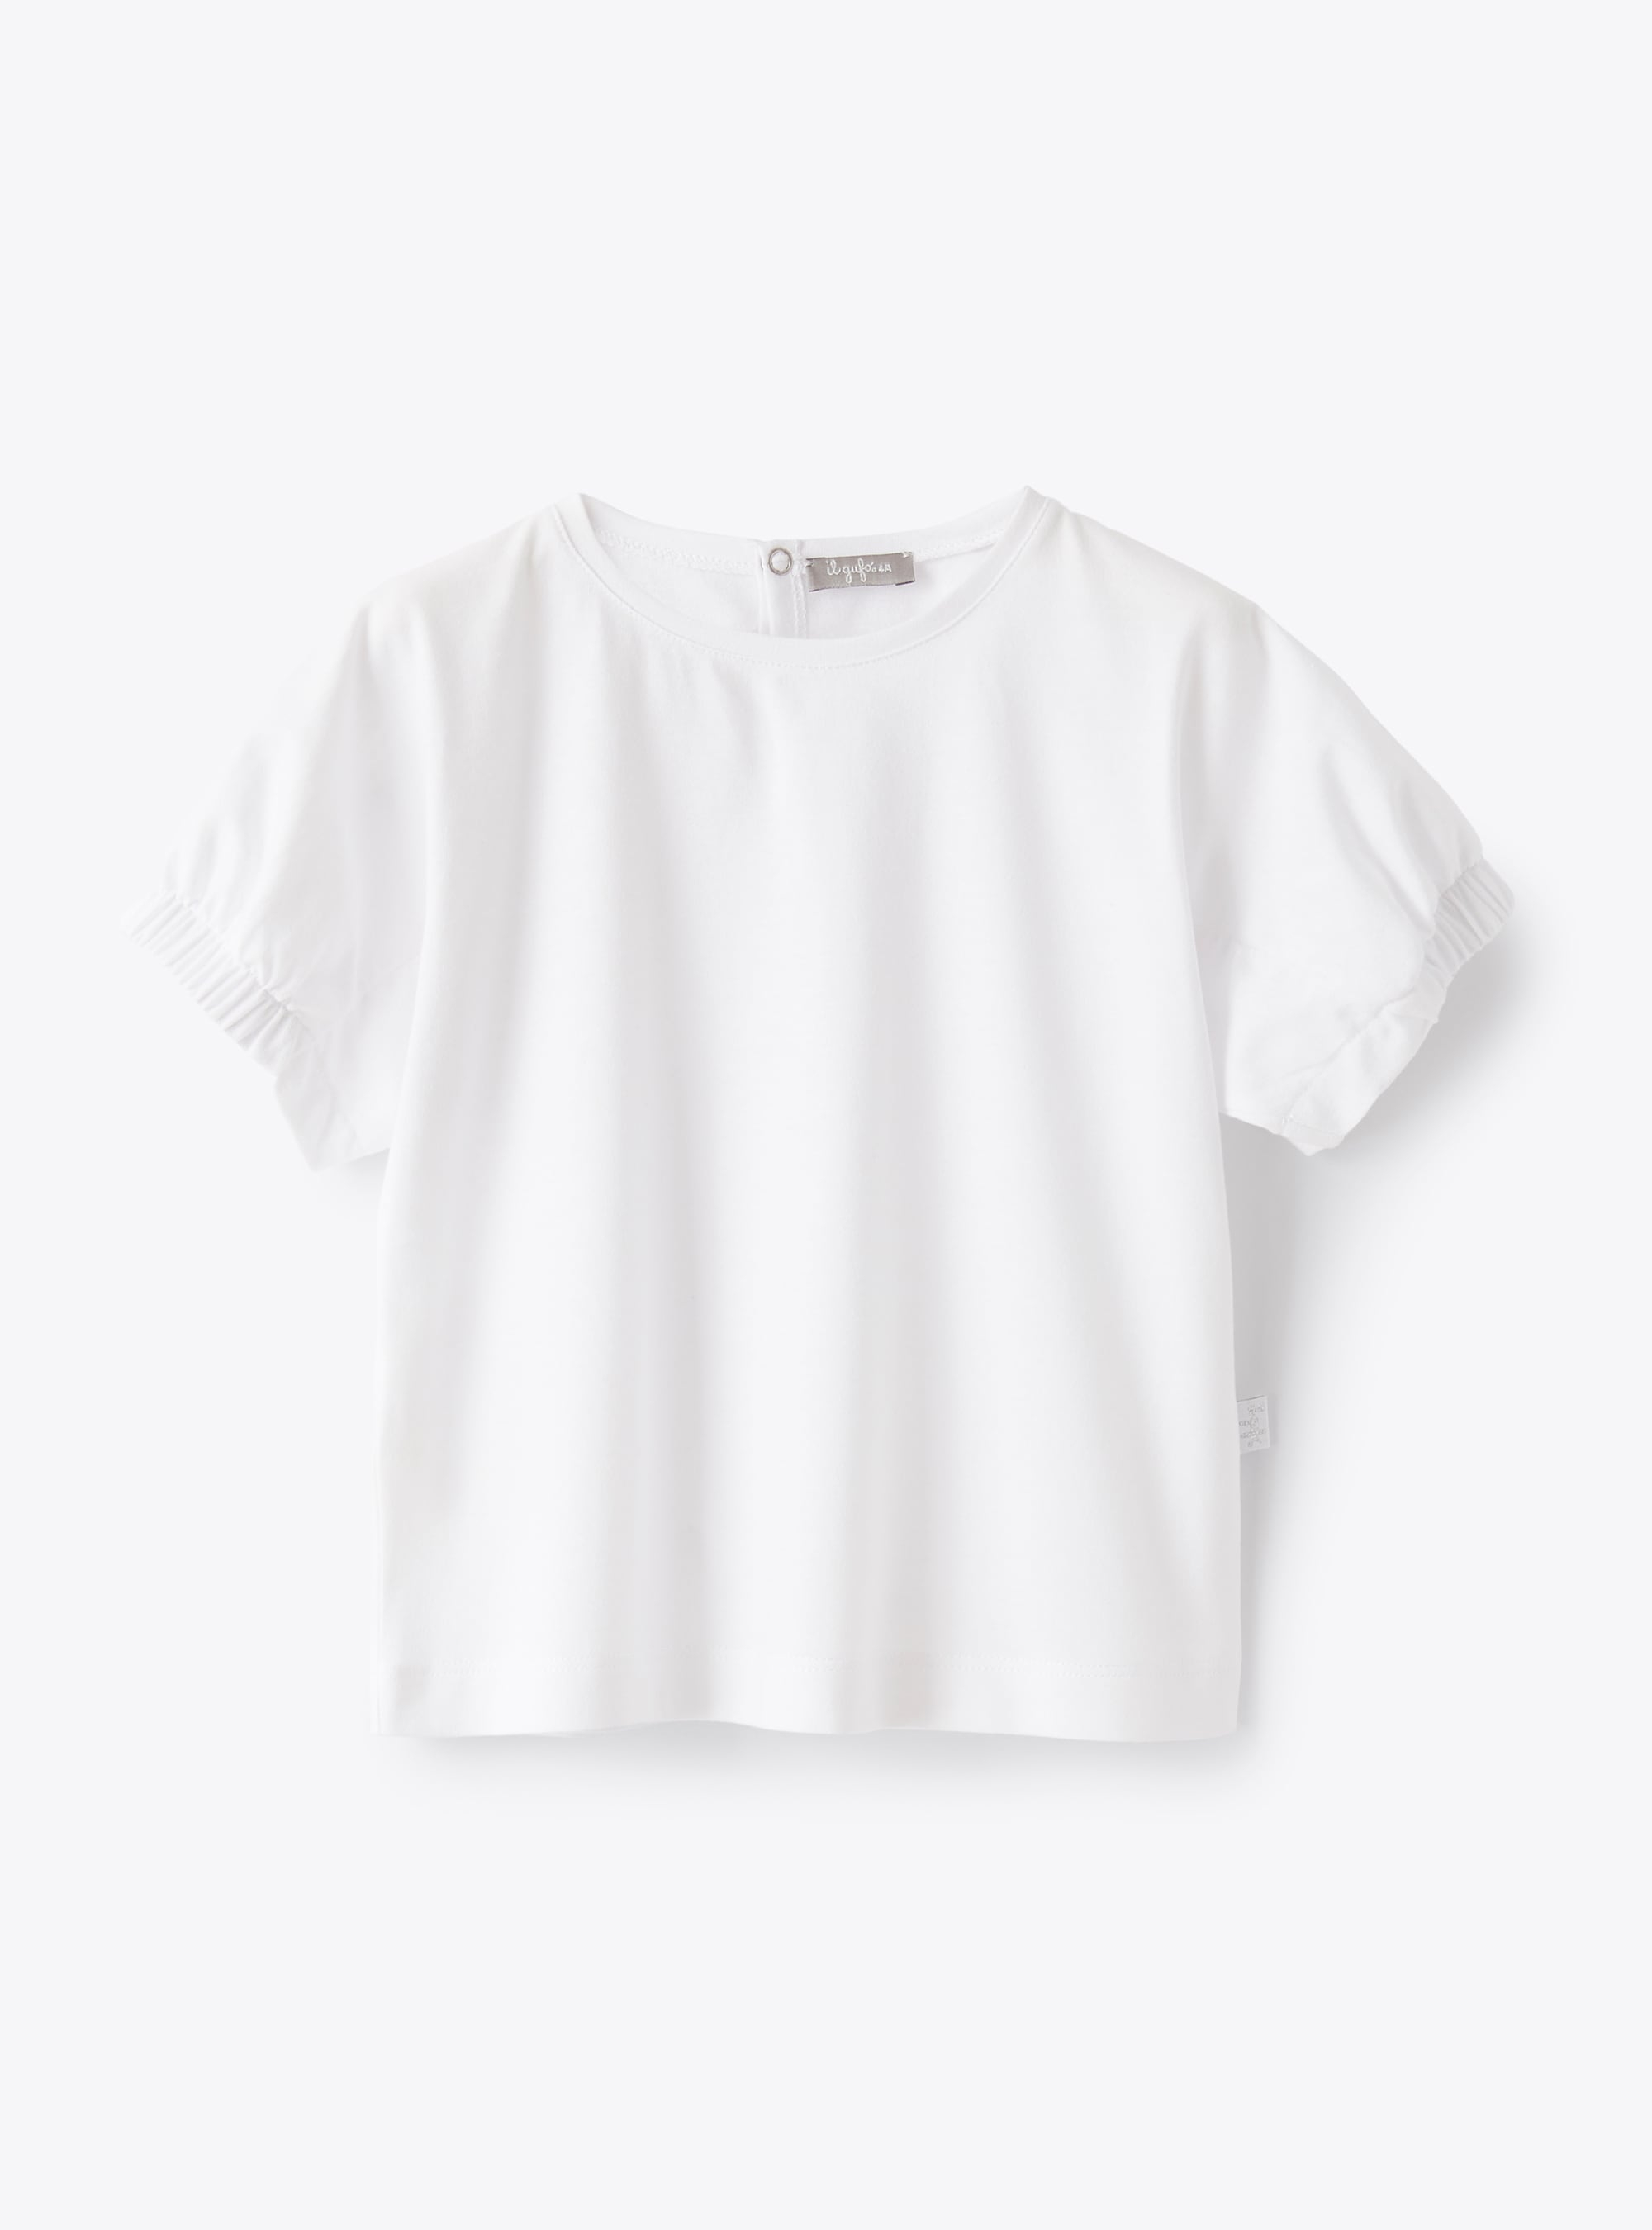 White t-shirt with white short sleeves - White | Il Gufo